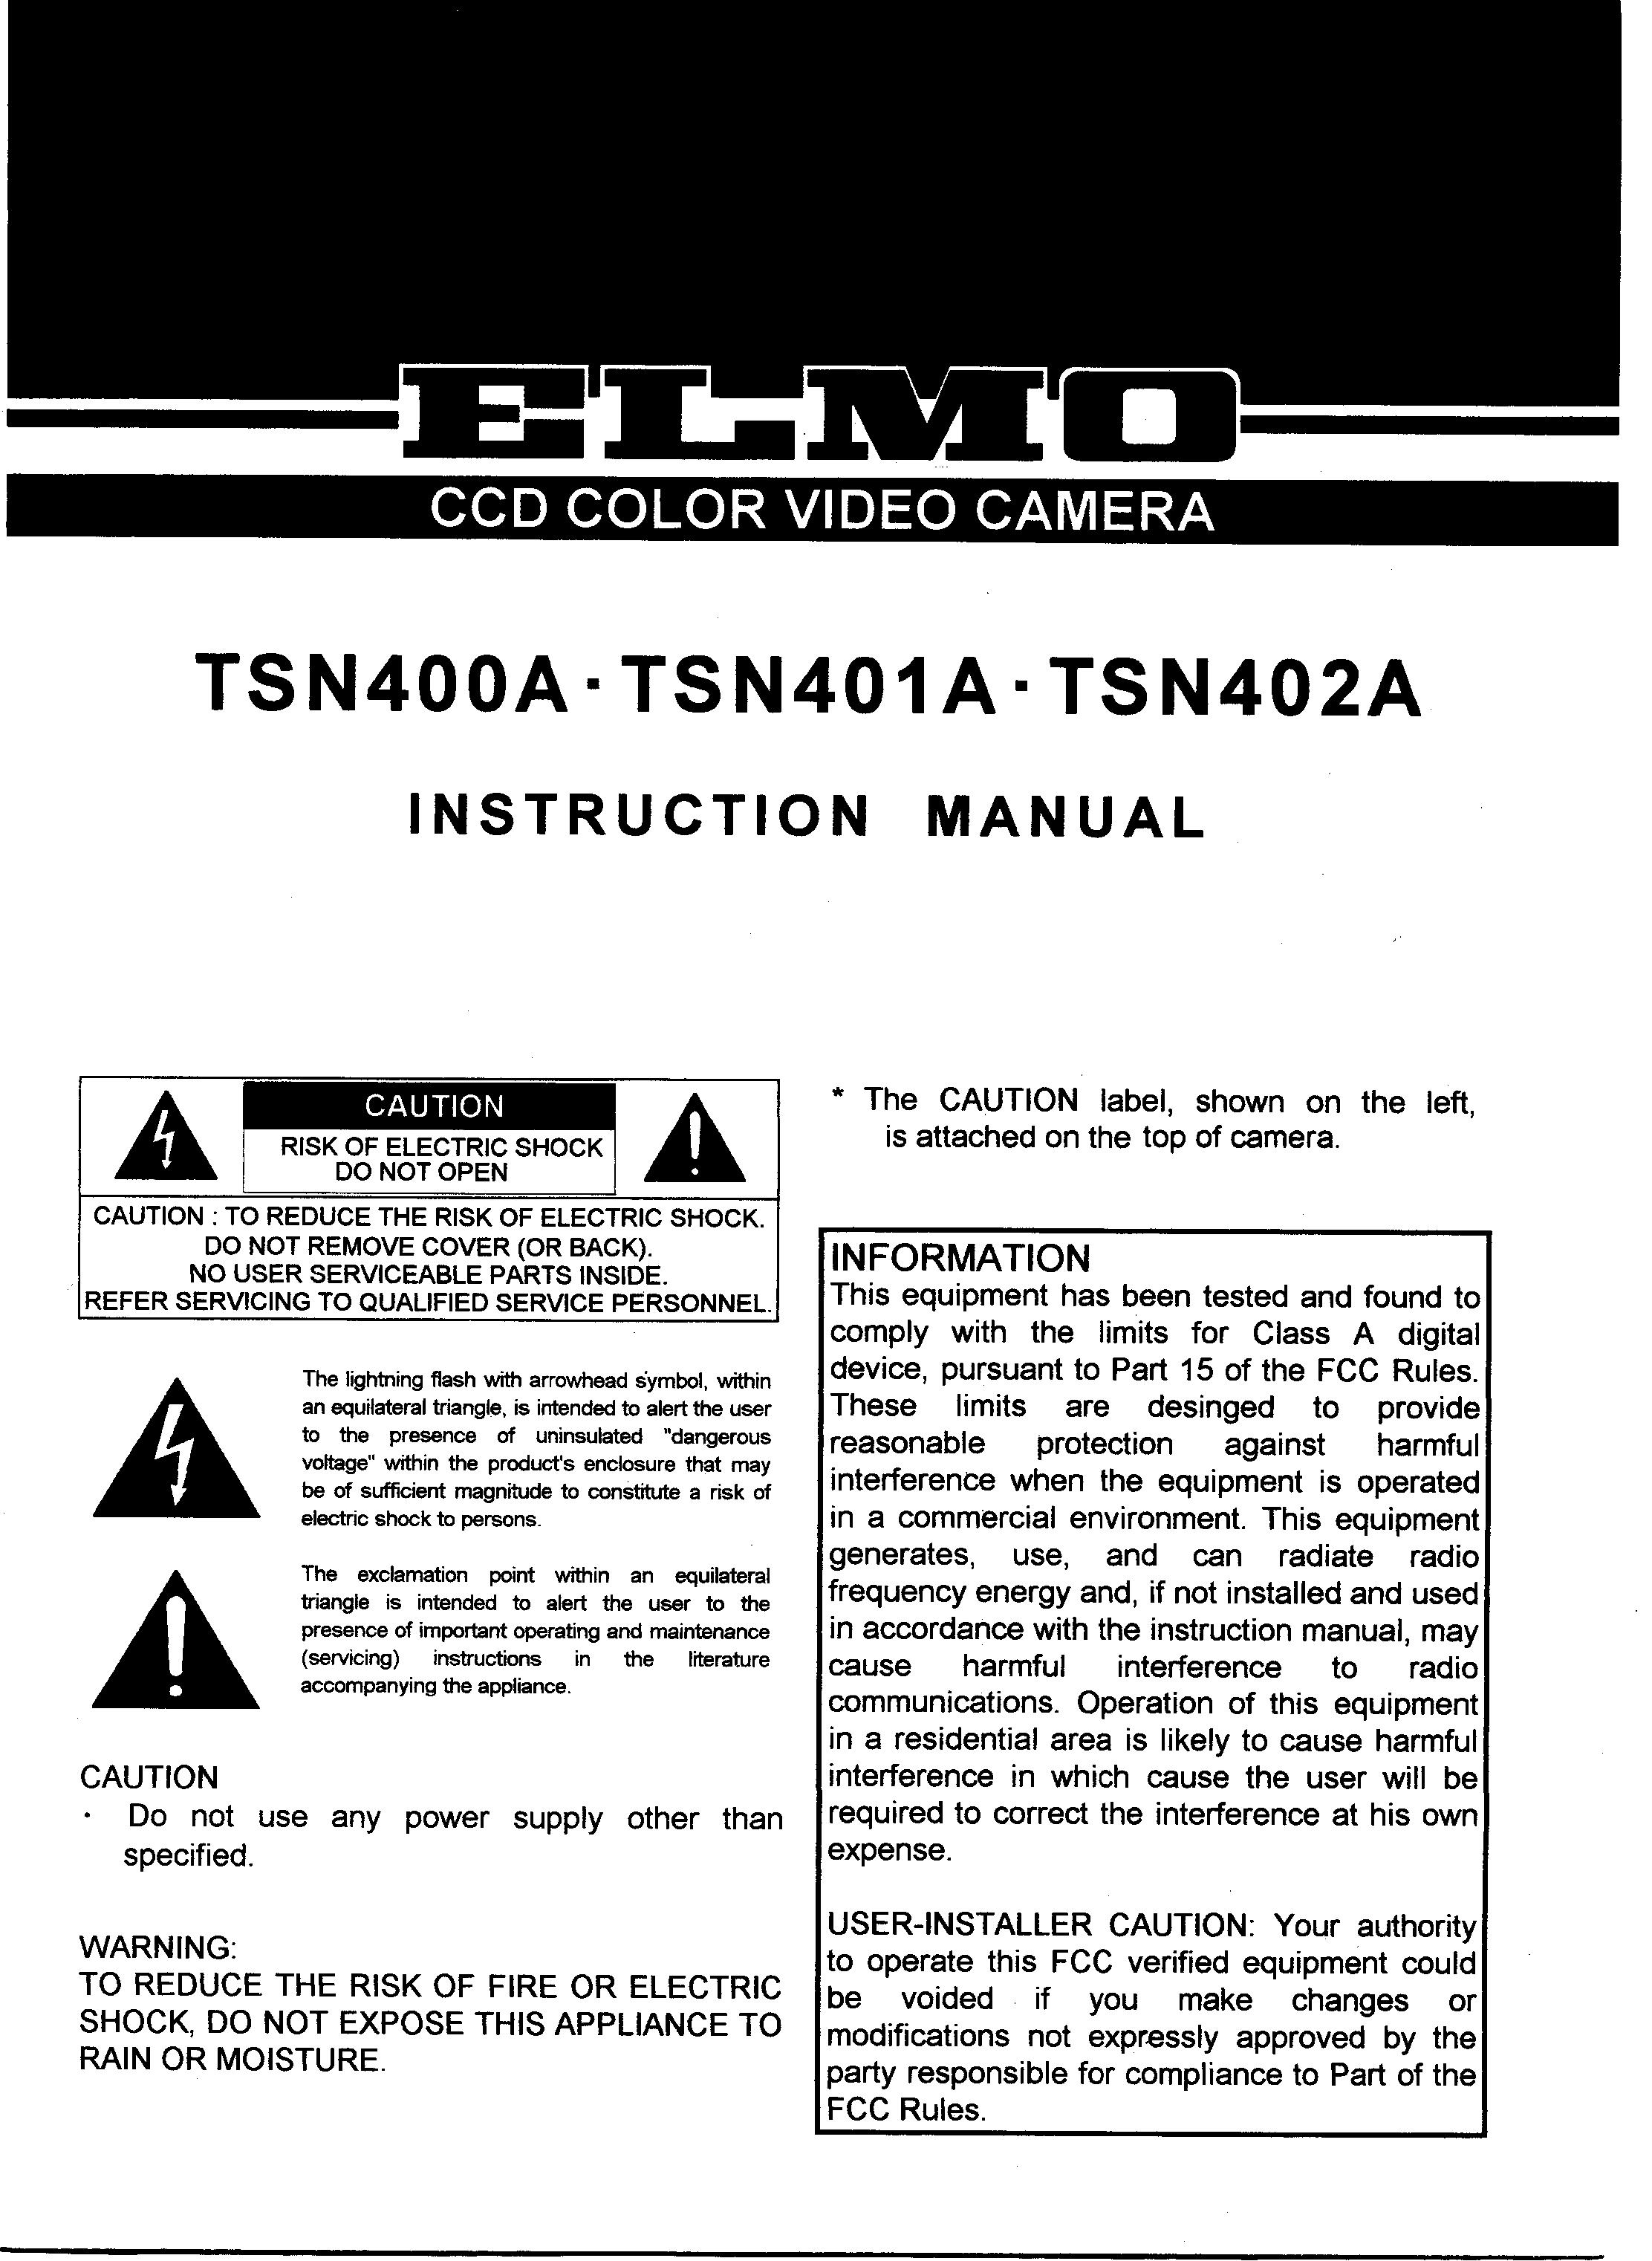 Elmo TSN402A Digital Camera User Manual